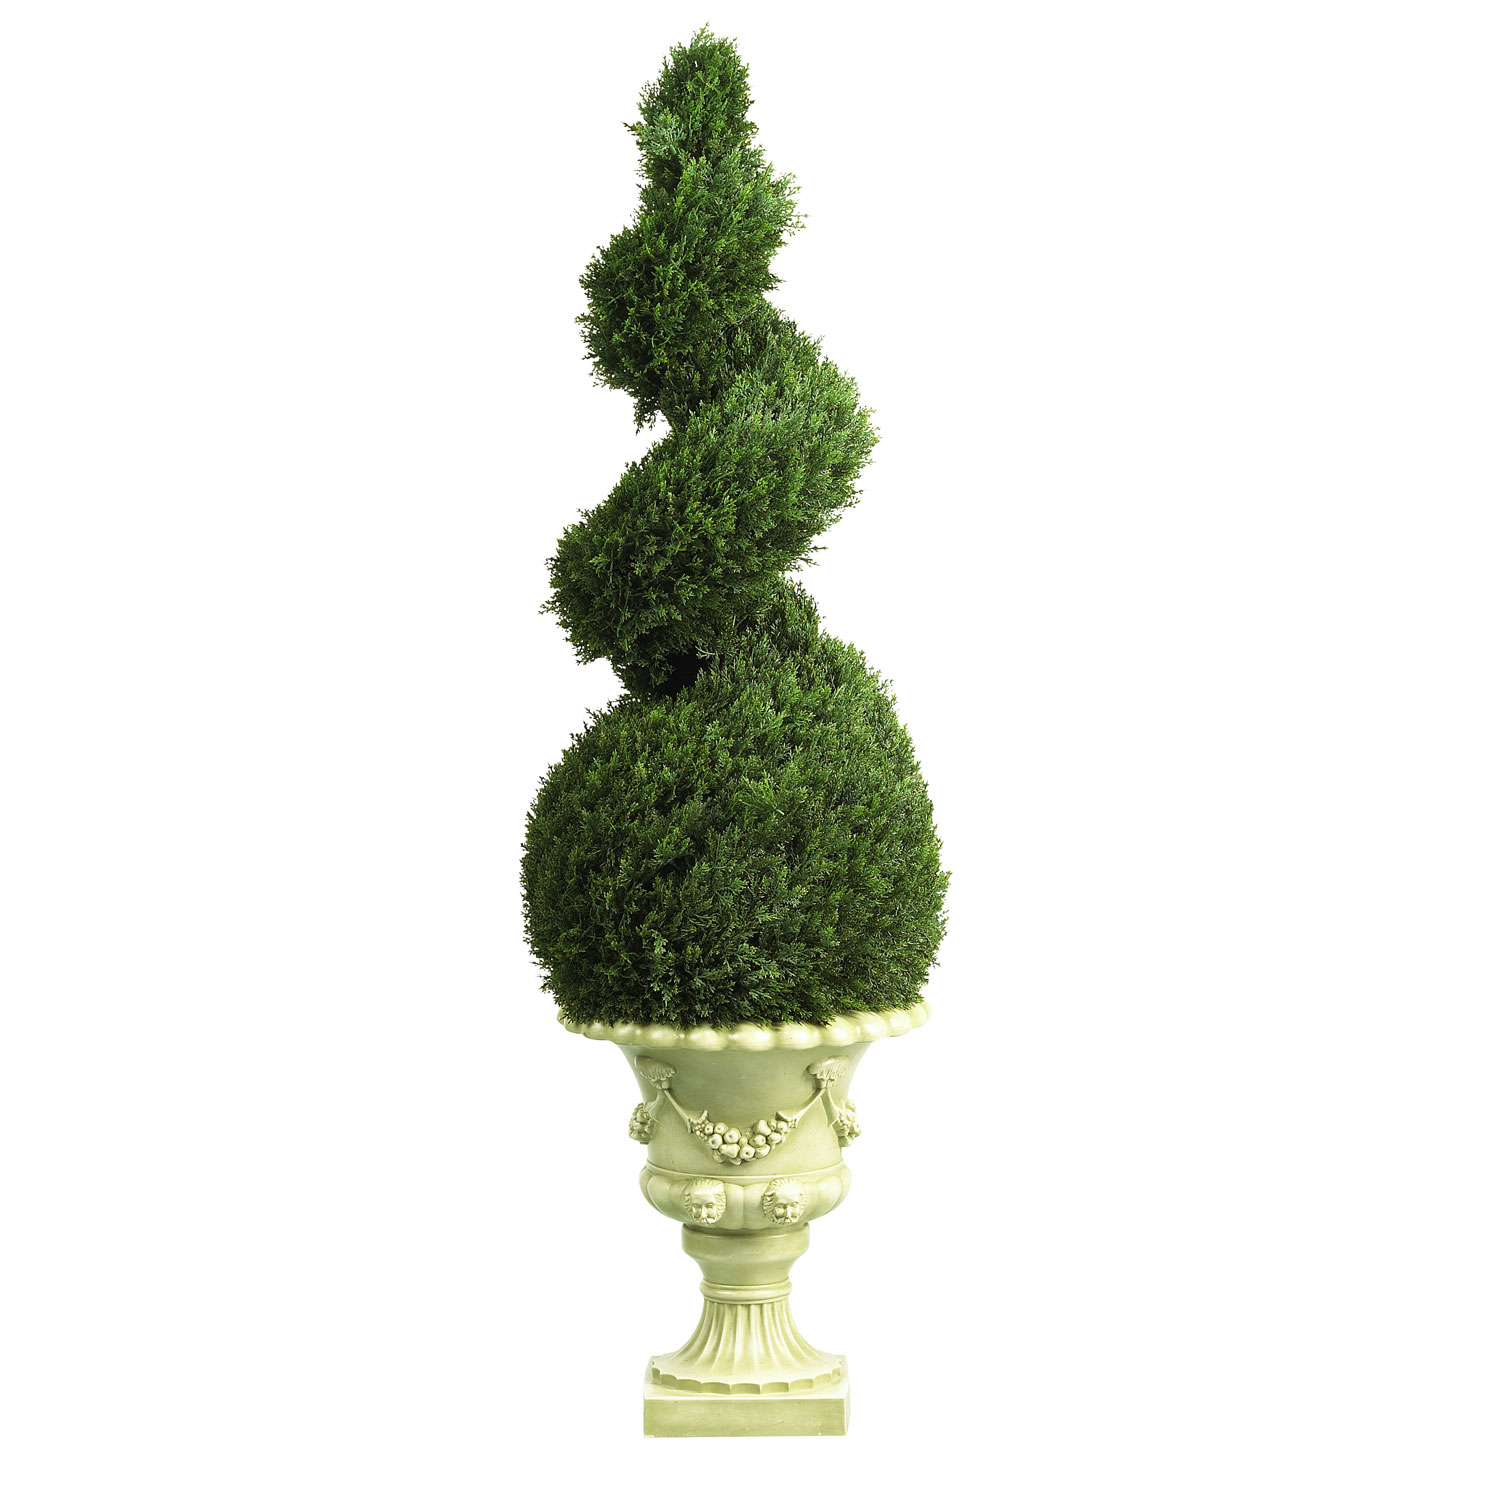 4 Foot Cedar Spiral Topiary In Decorative Urn